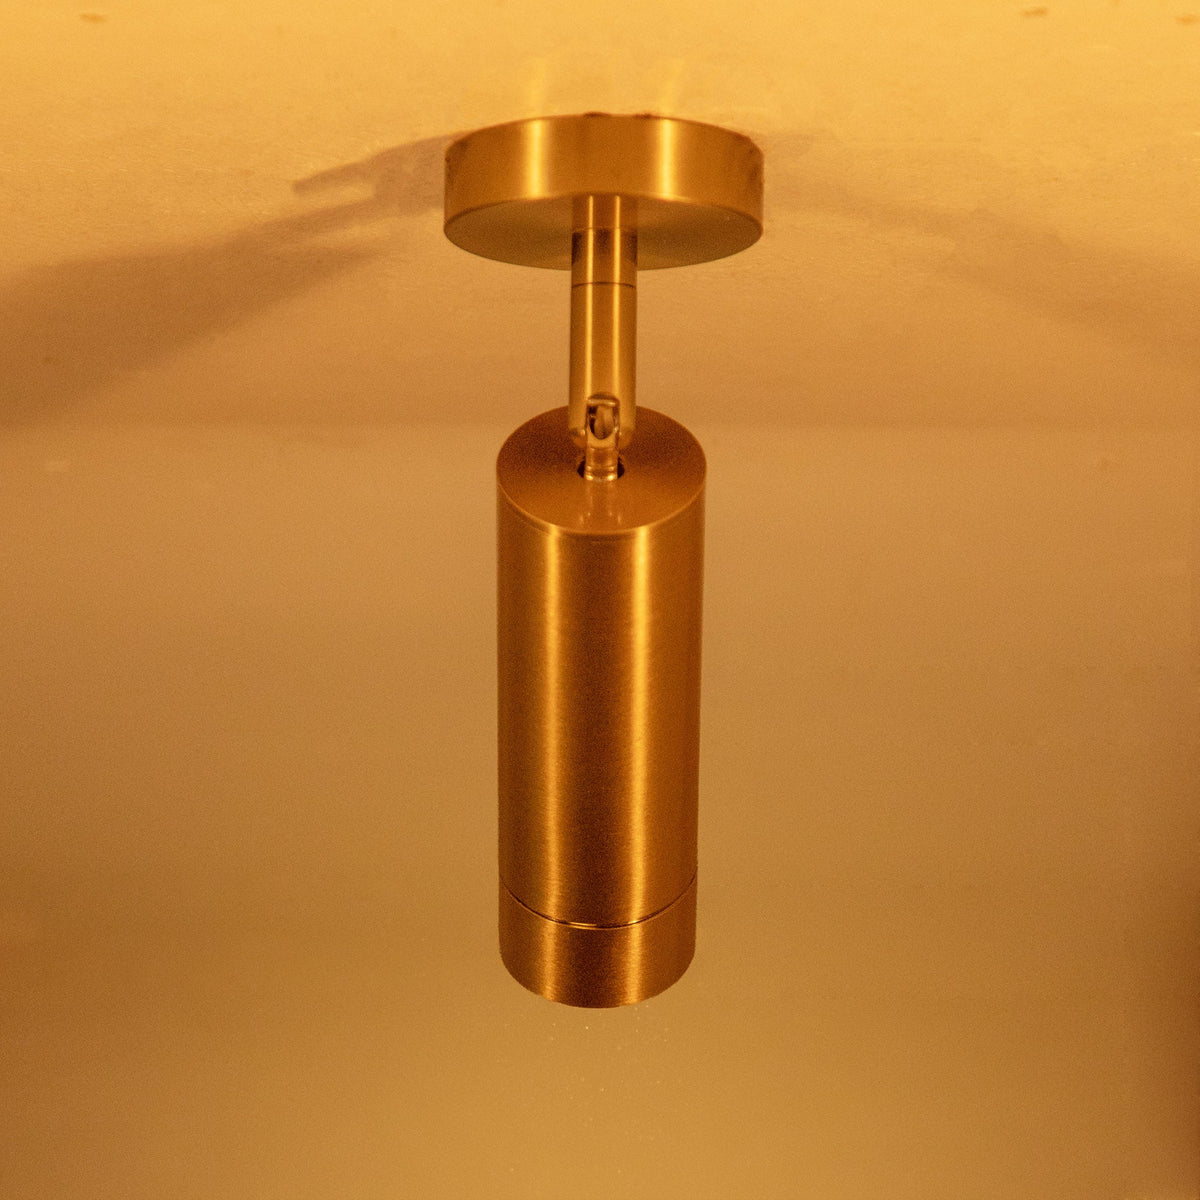 Buy Germany Brass Adjustable LED Spot Light online